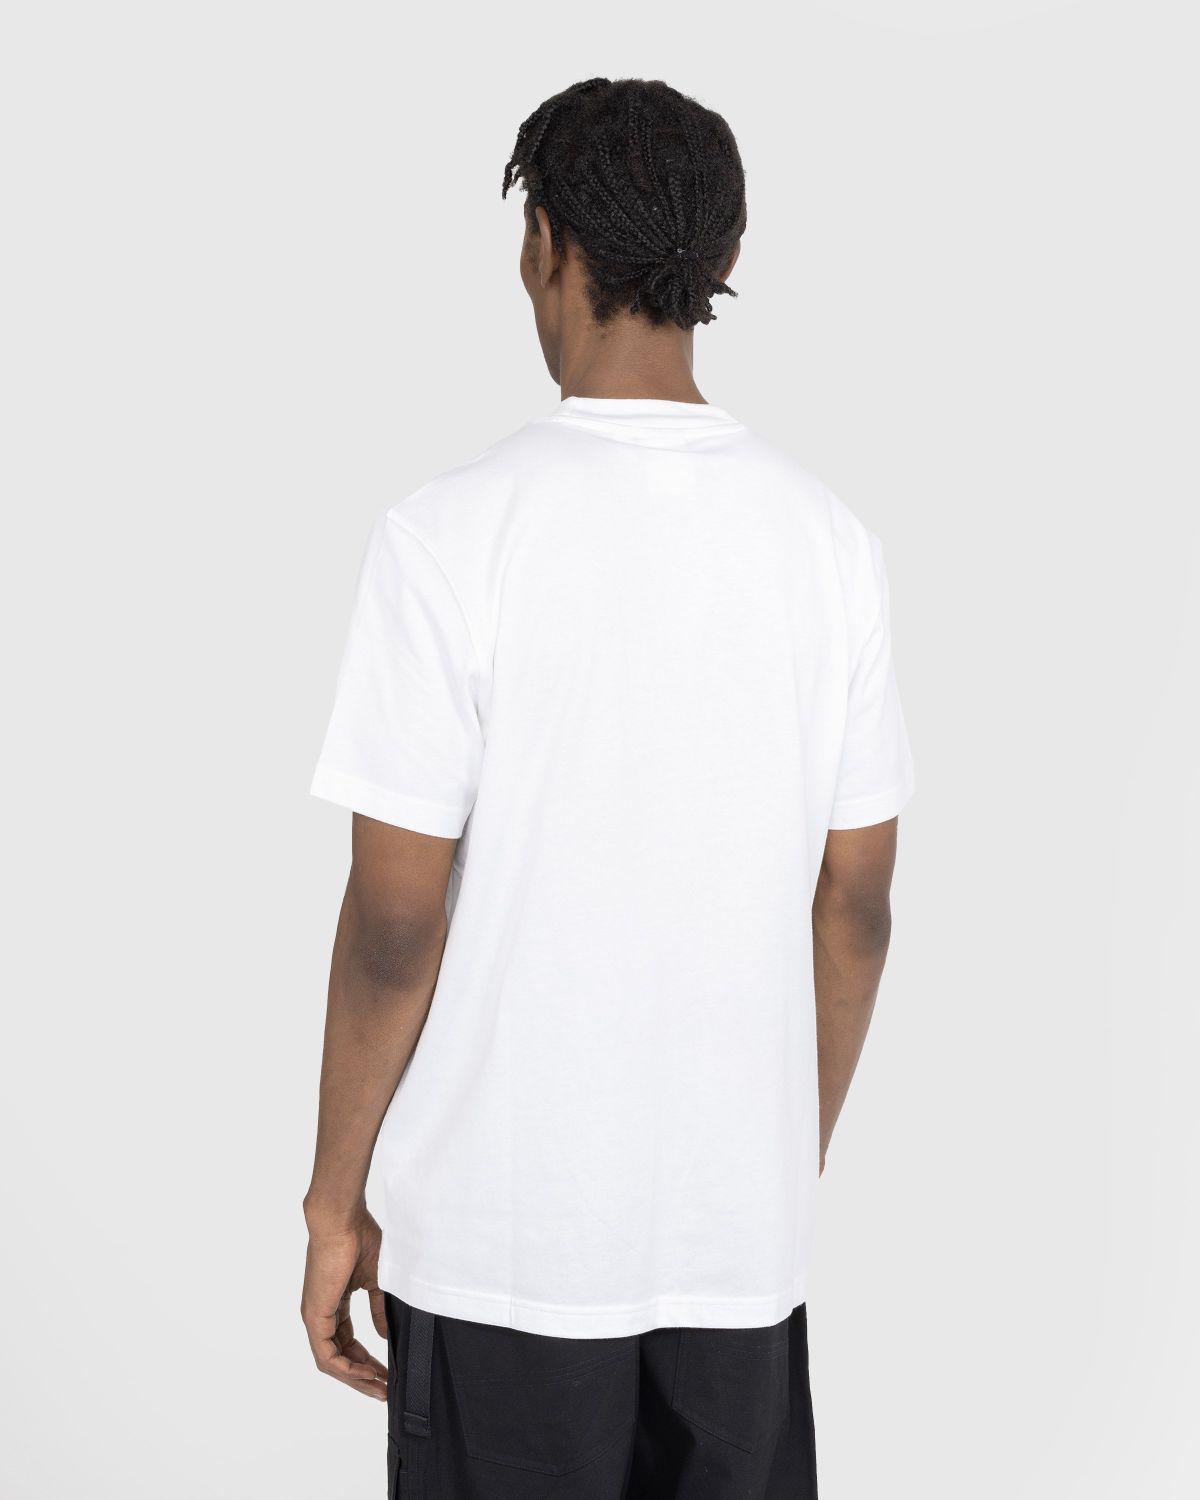 Adidas – Graphic Logo T-Shirt White - Tops - White - Image 3